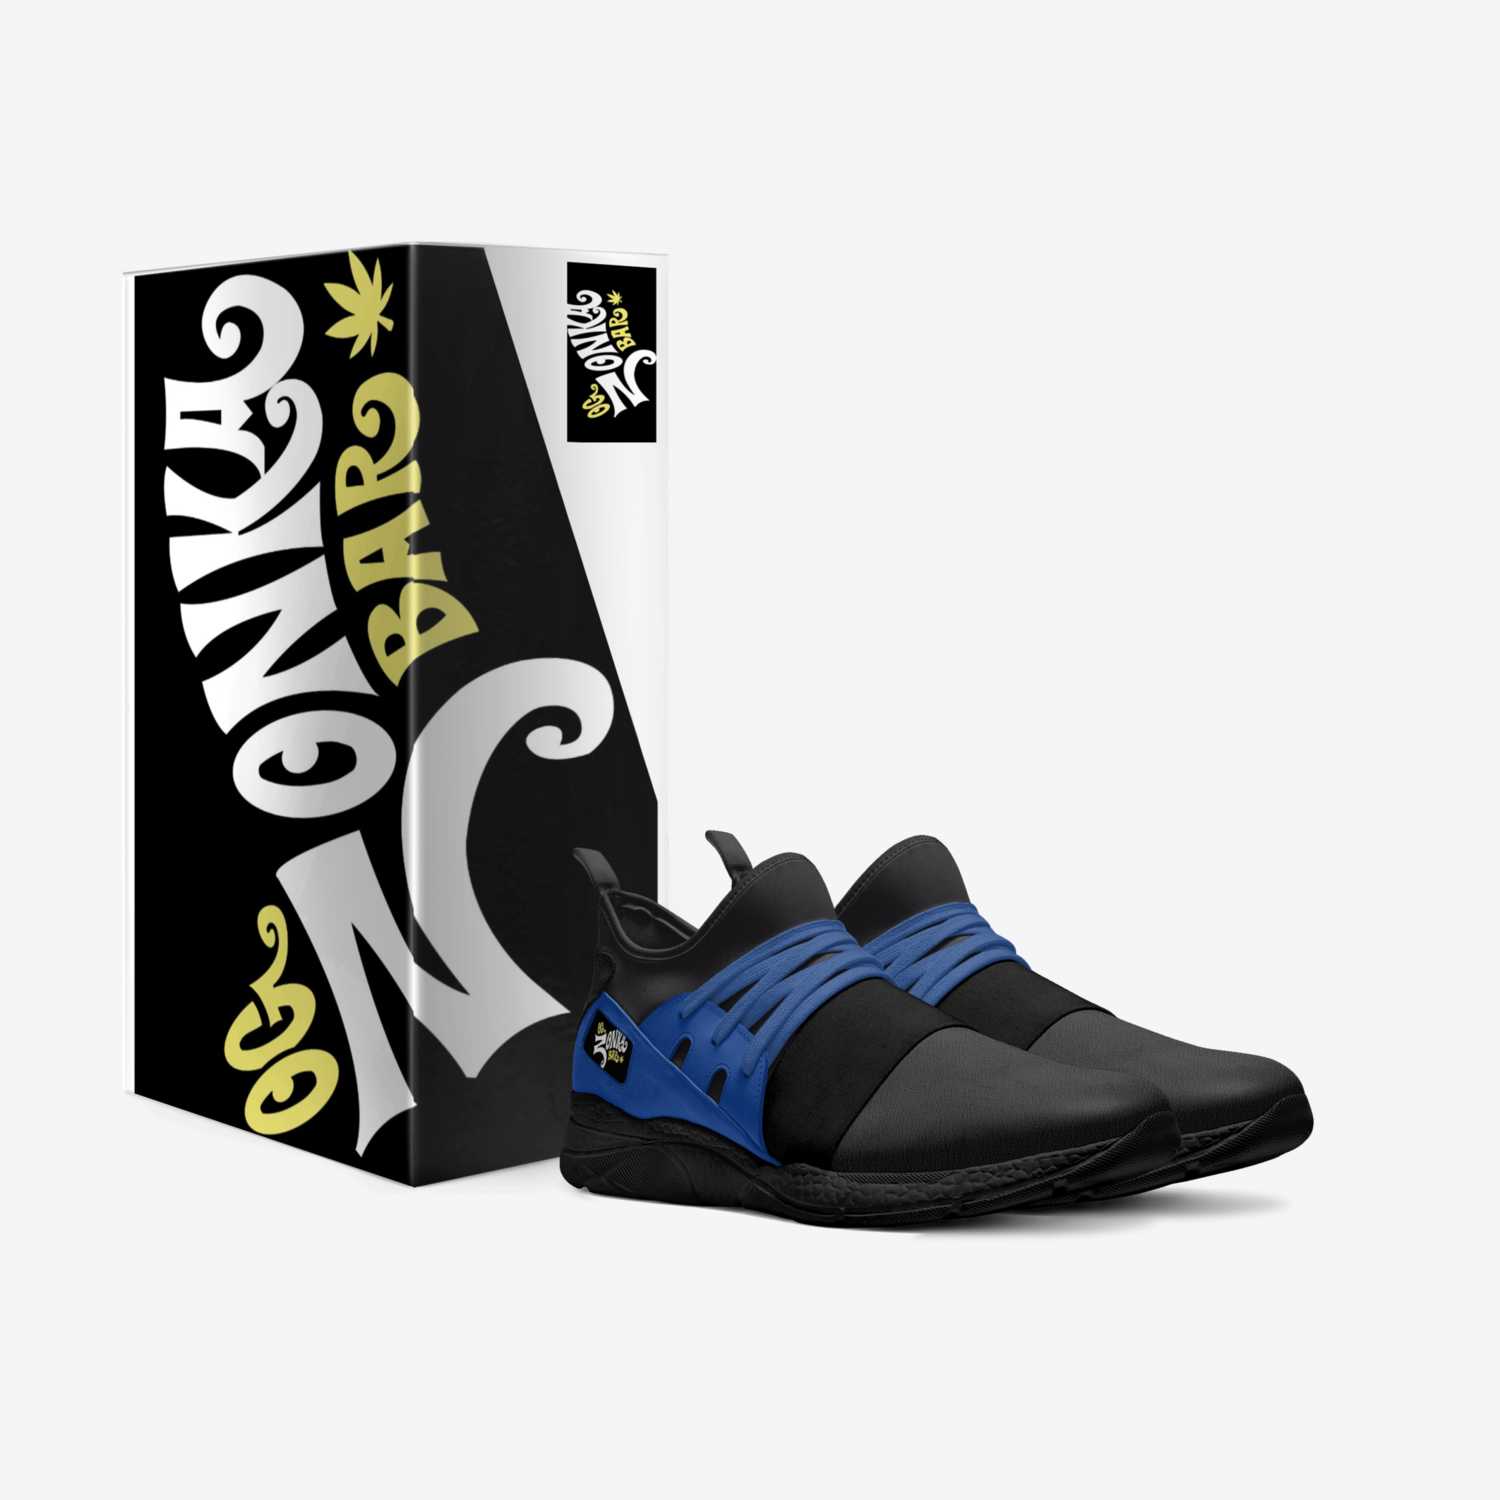 OG Zonka Kush 1 custom made in Italy shoes by Chris Martin | Box view